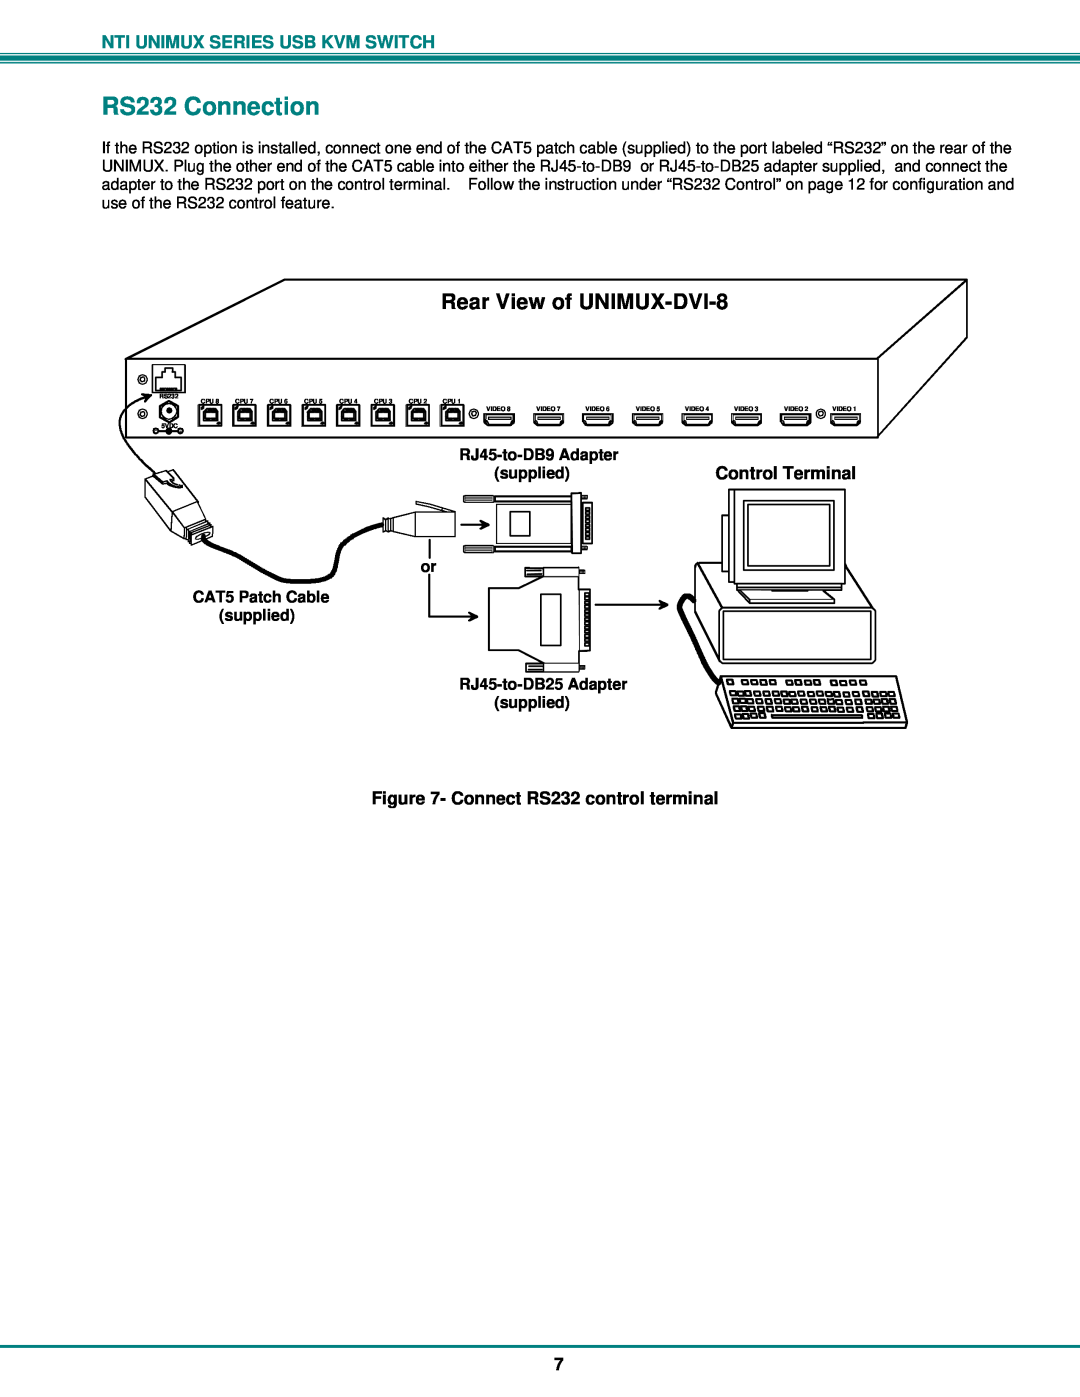 Network Technologies DVI-x operation manual RS232 Connection, Nti Unimux Series Usb Kvm Switch, Control Terminal 